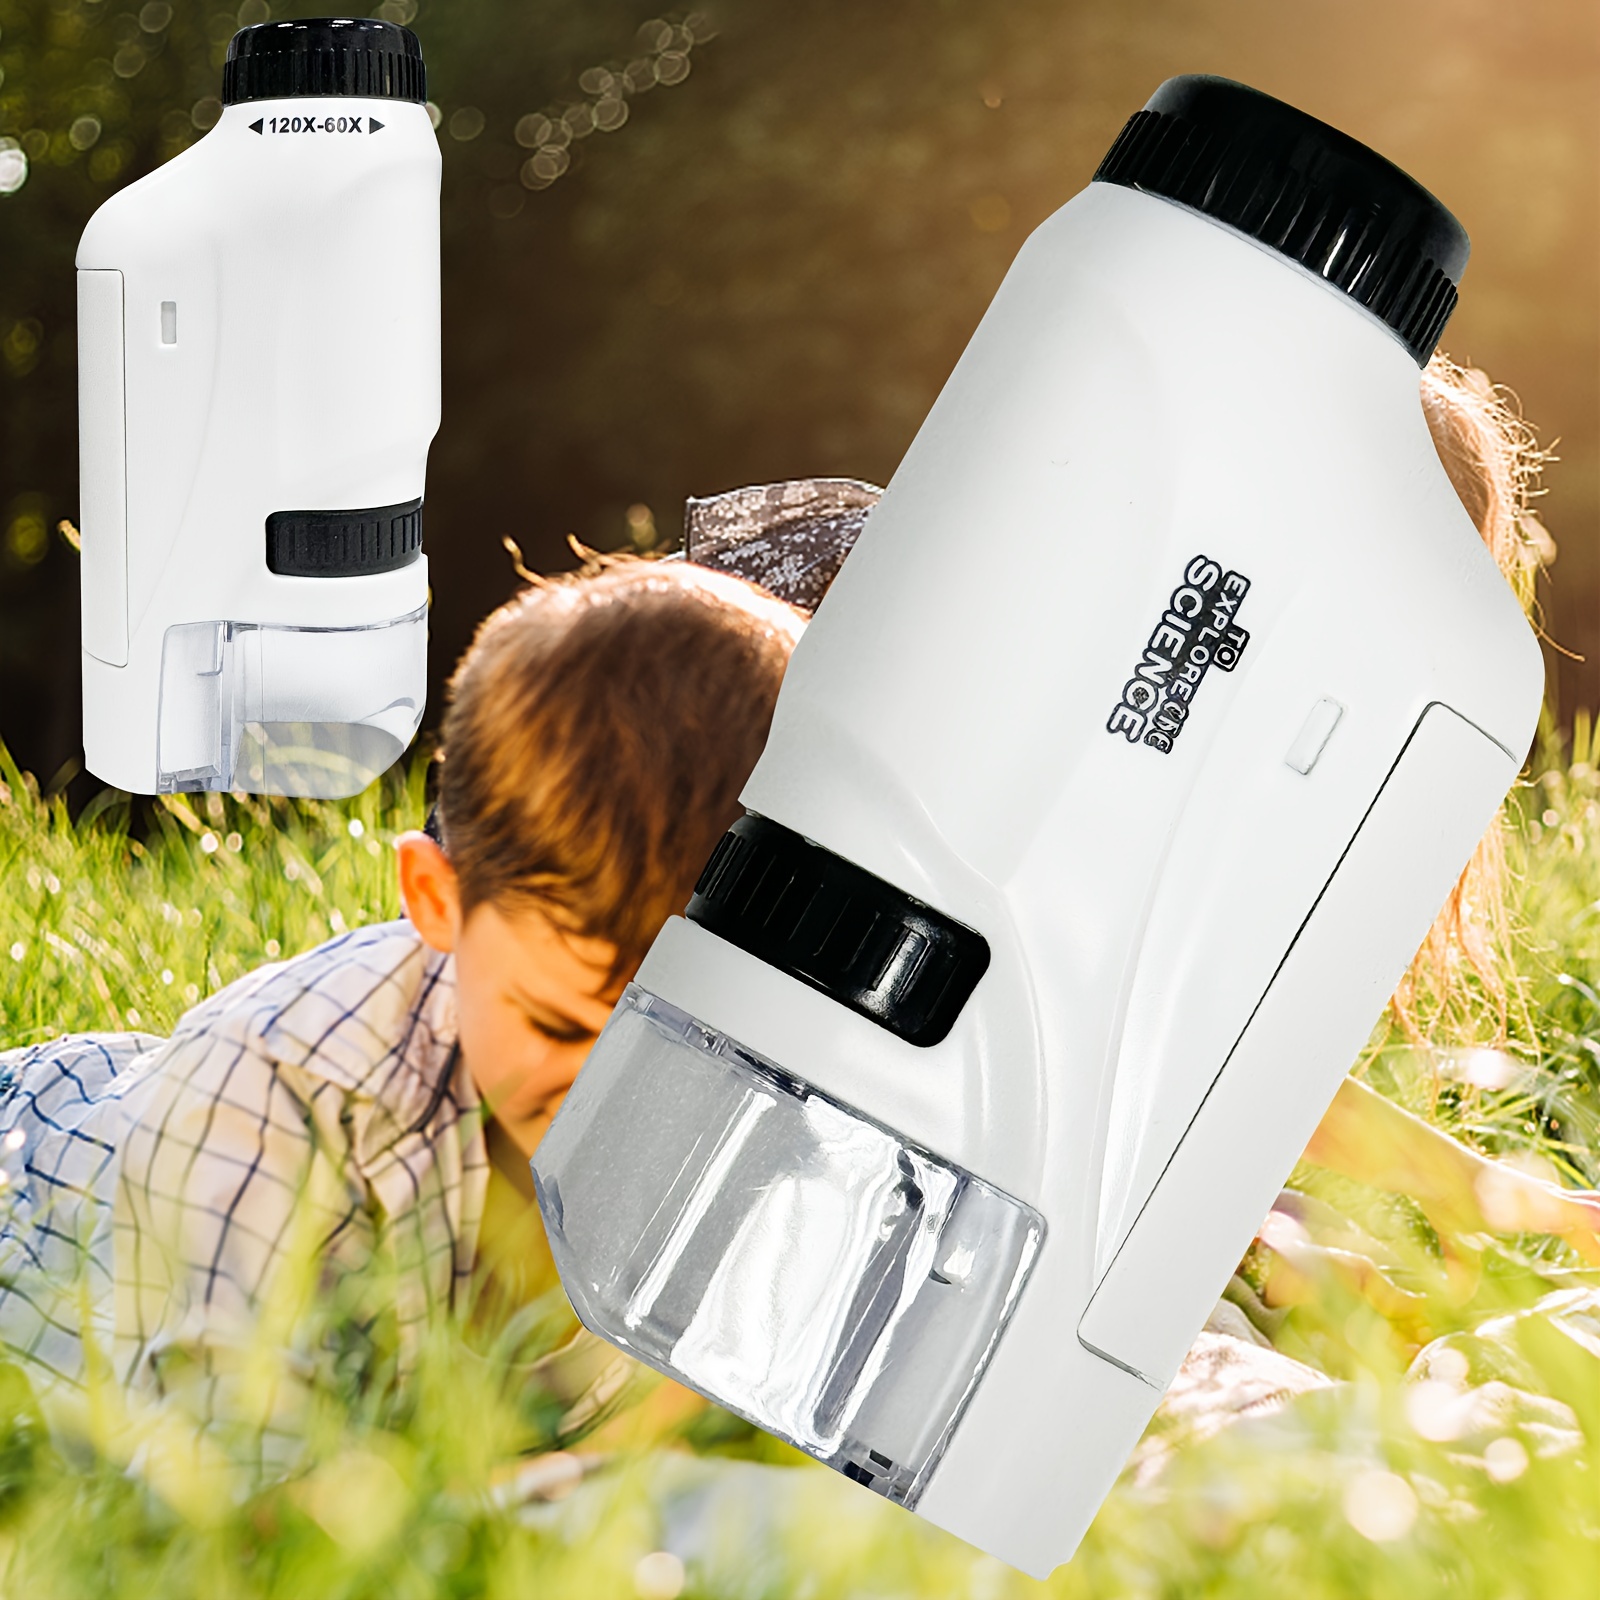 Mini Microscope Portatif - Jouet Enfant